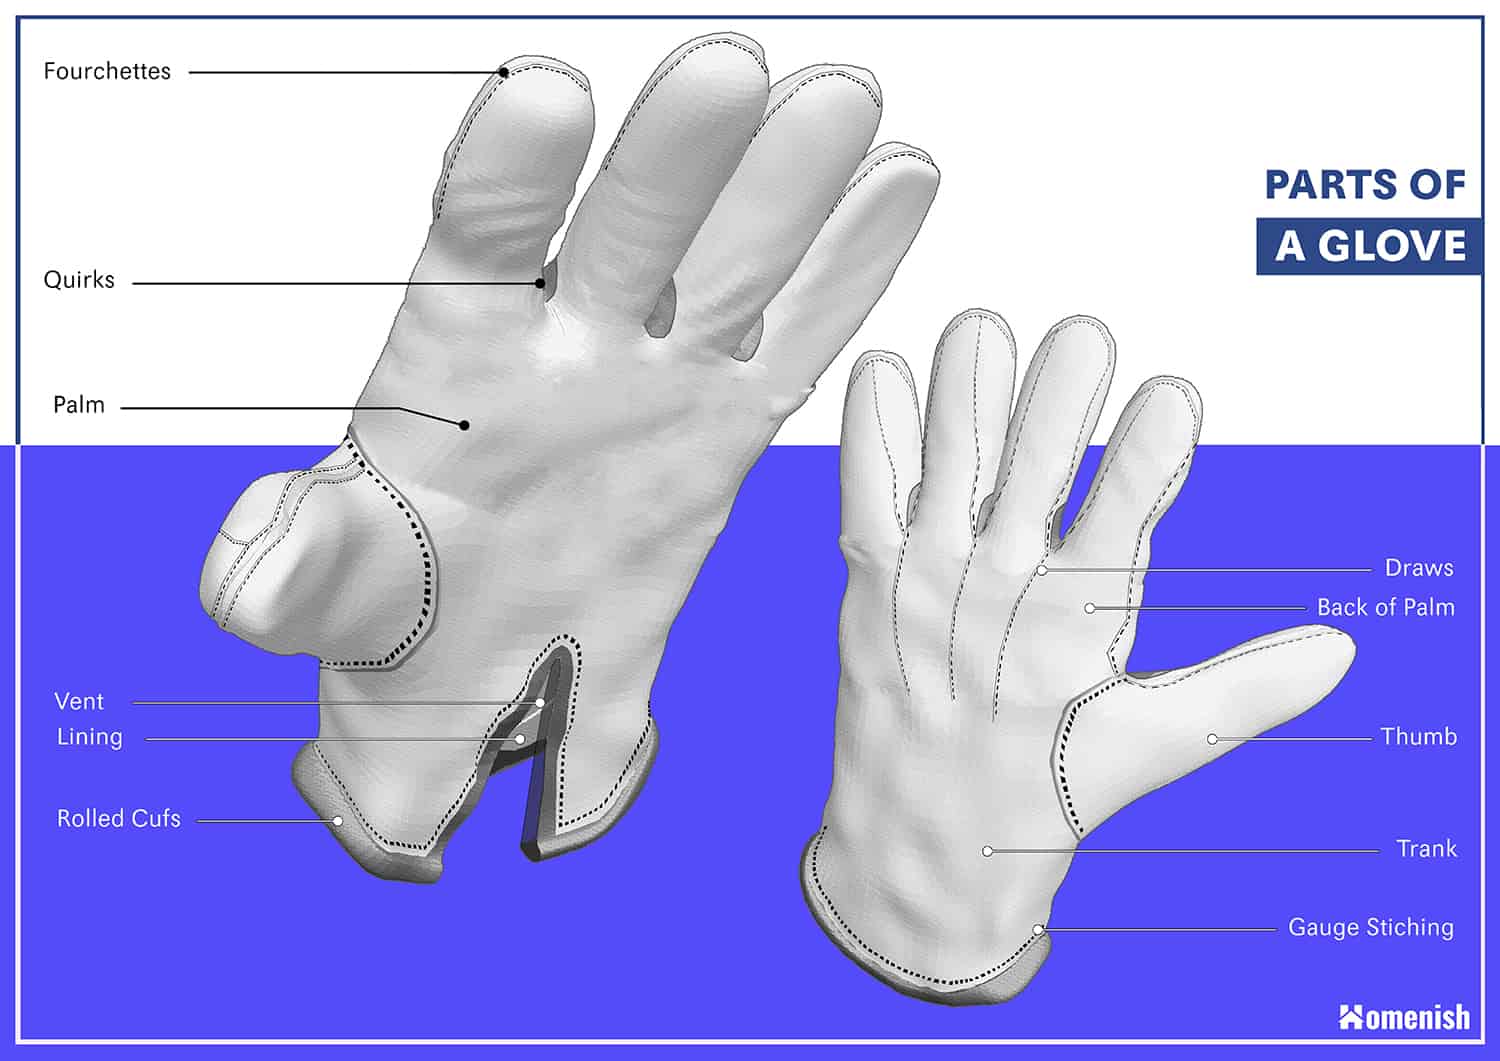 Parts of a Glove Diagram